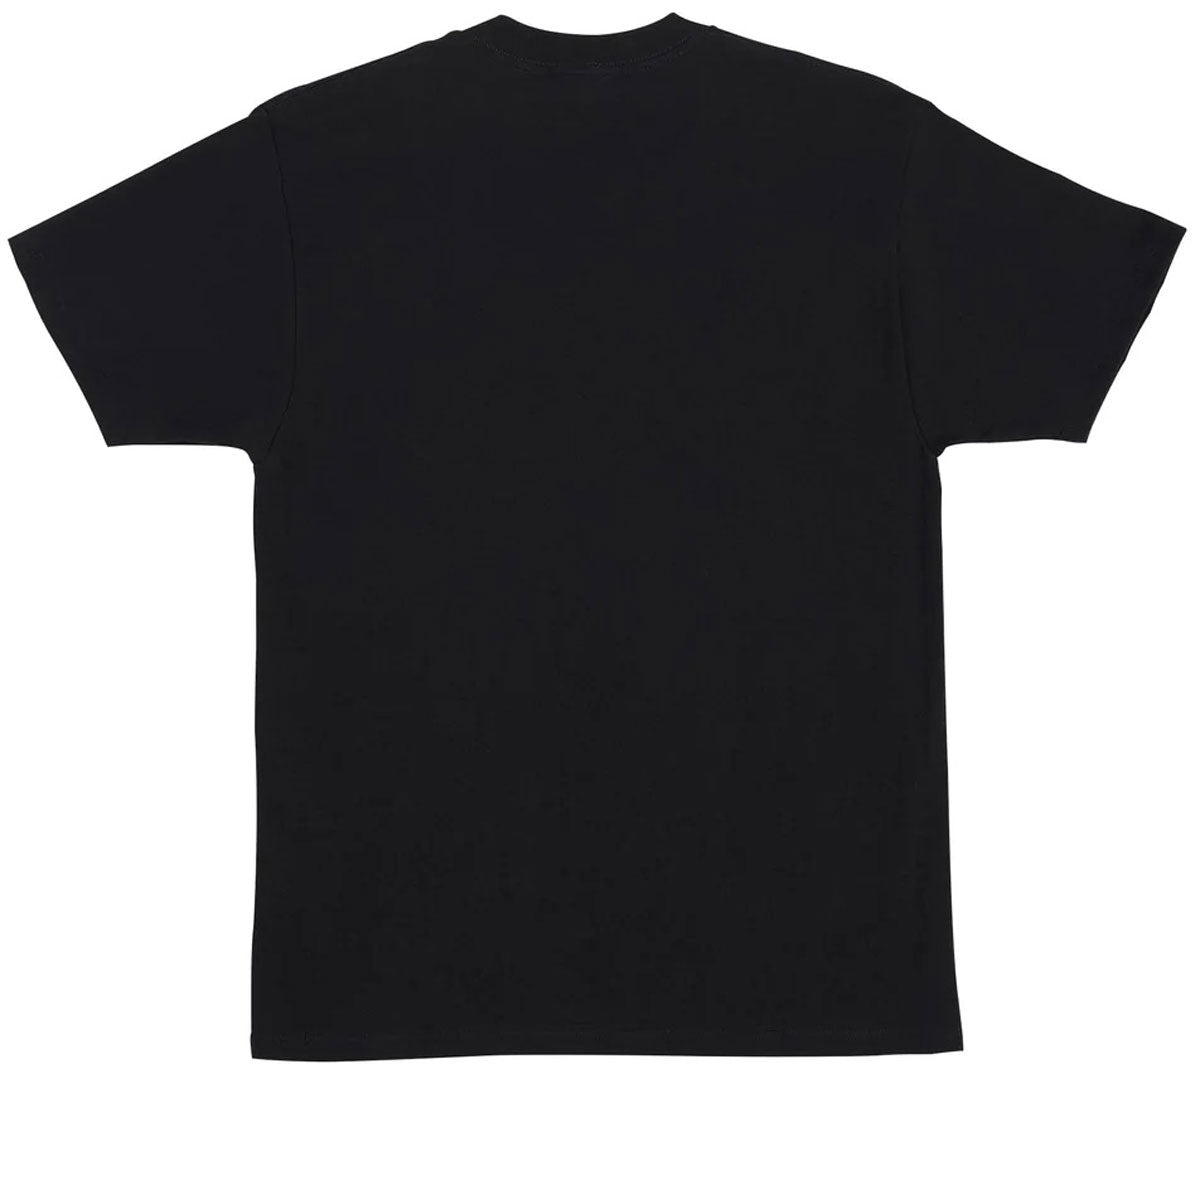 Creature Logo Flame T-Shirt - Black image 2